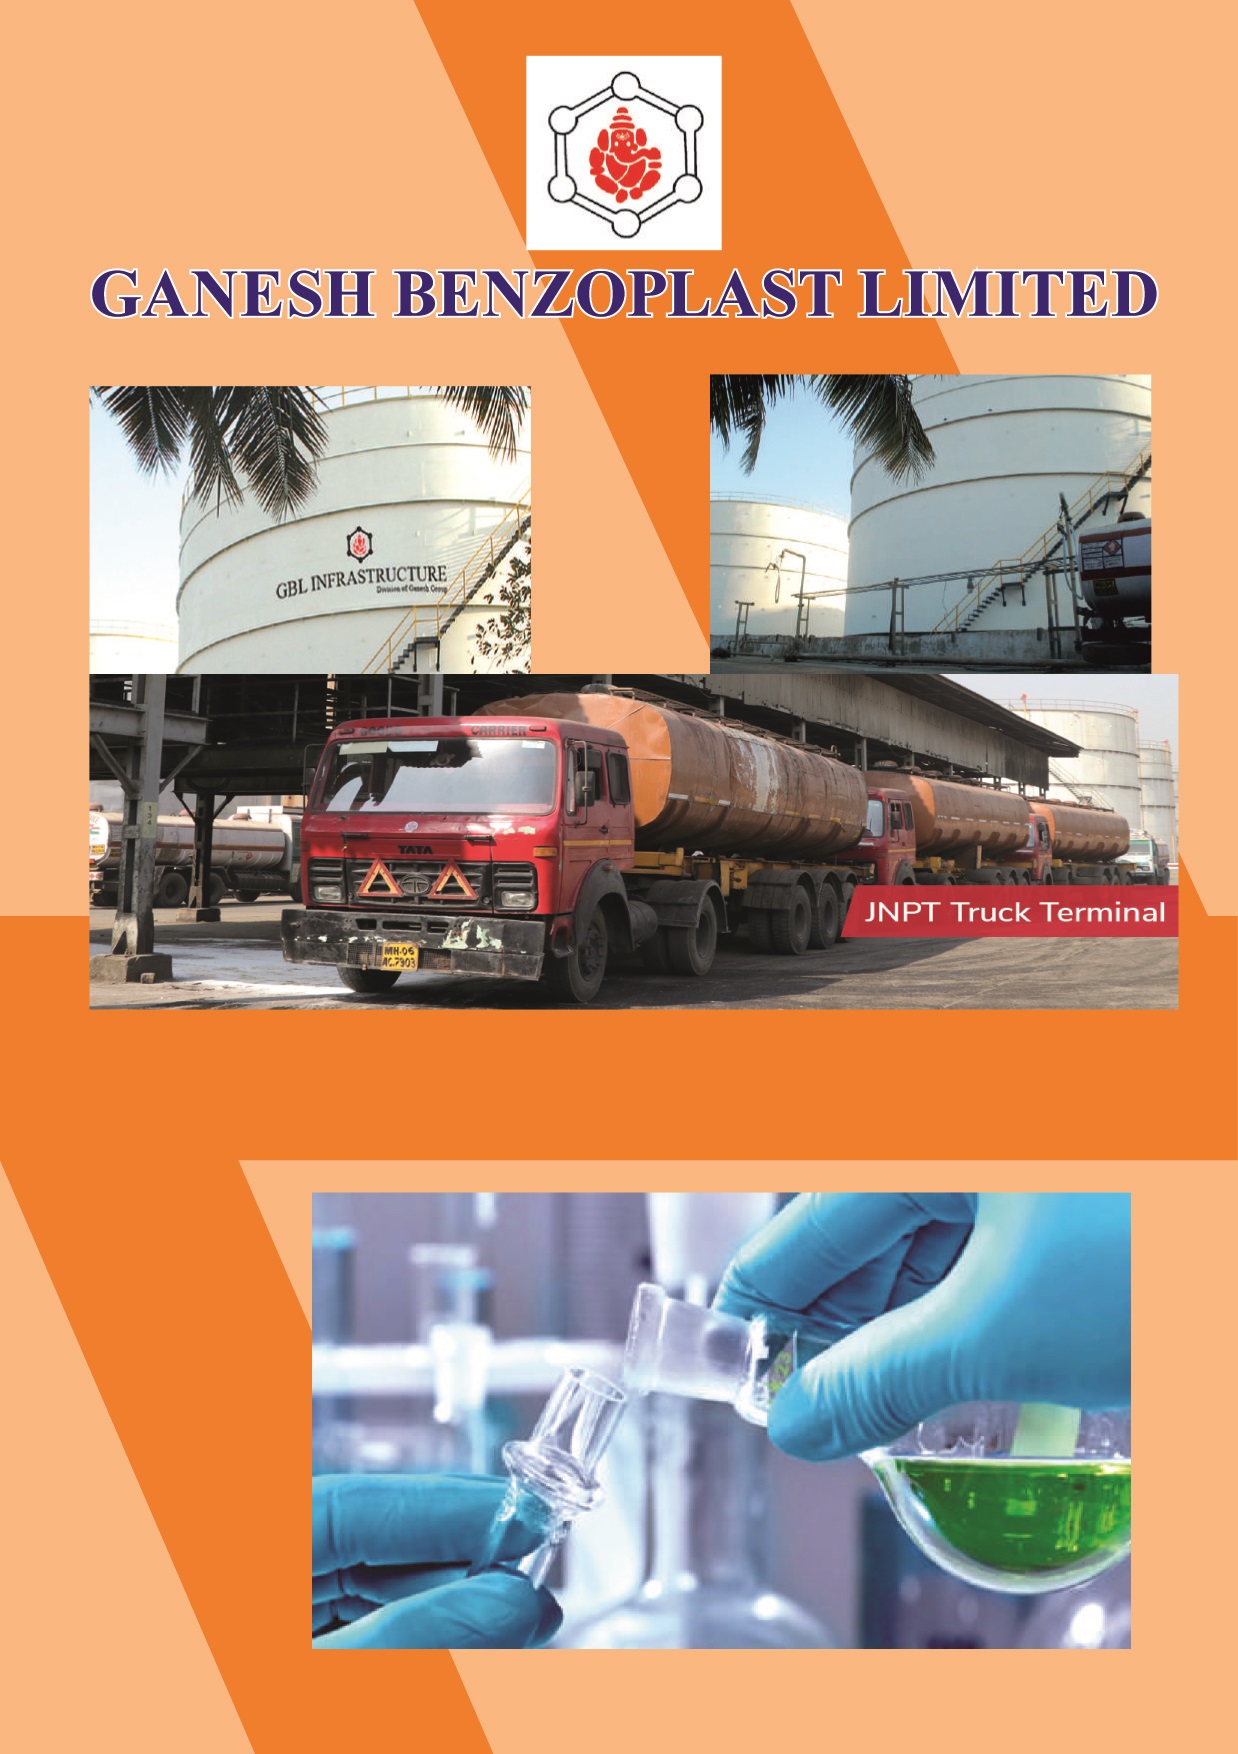 Ganesh-Benzoplast-Demerger-Slump-Sale-Chemical-Business